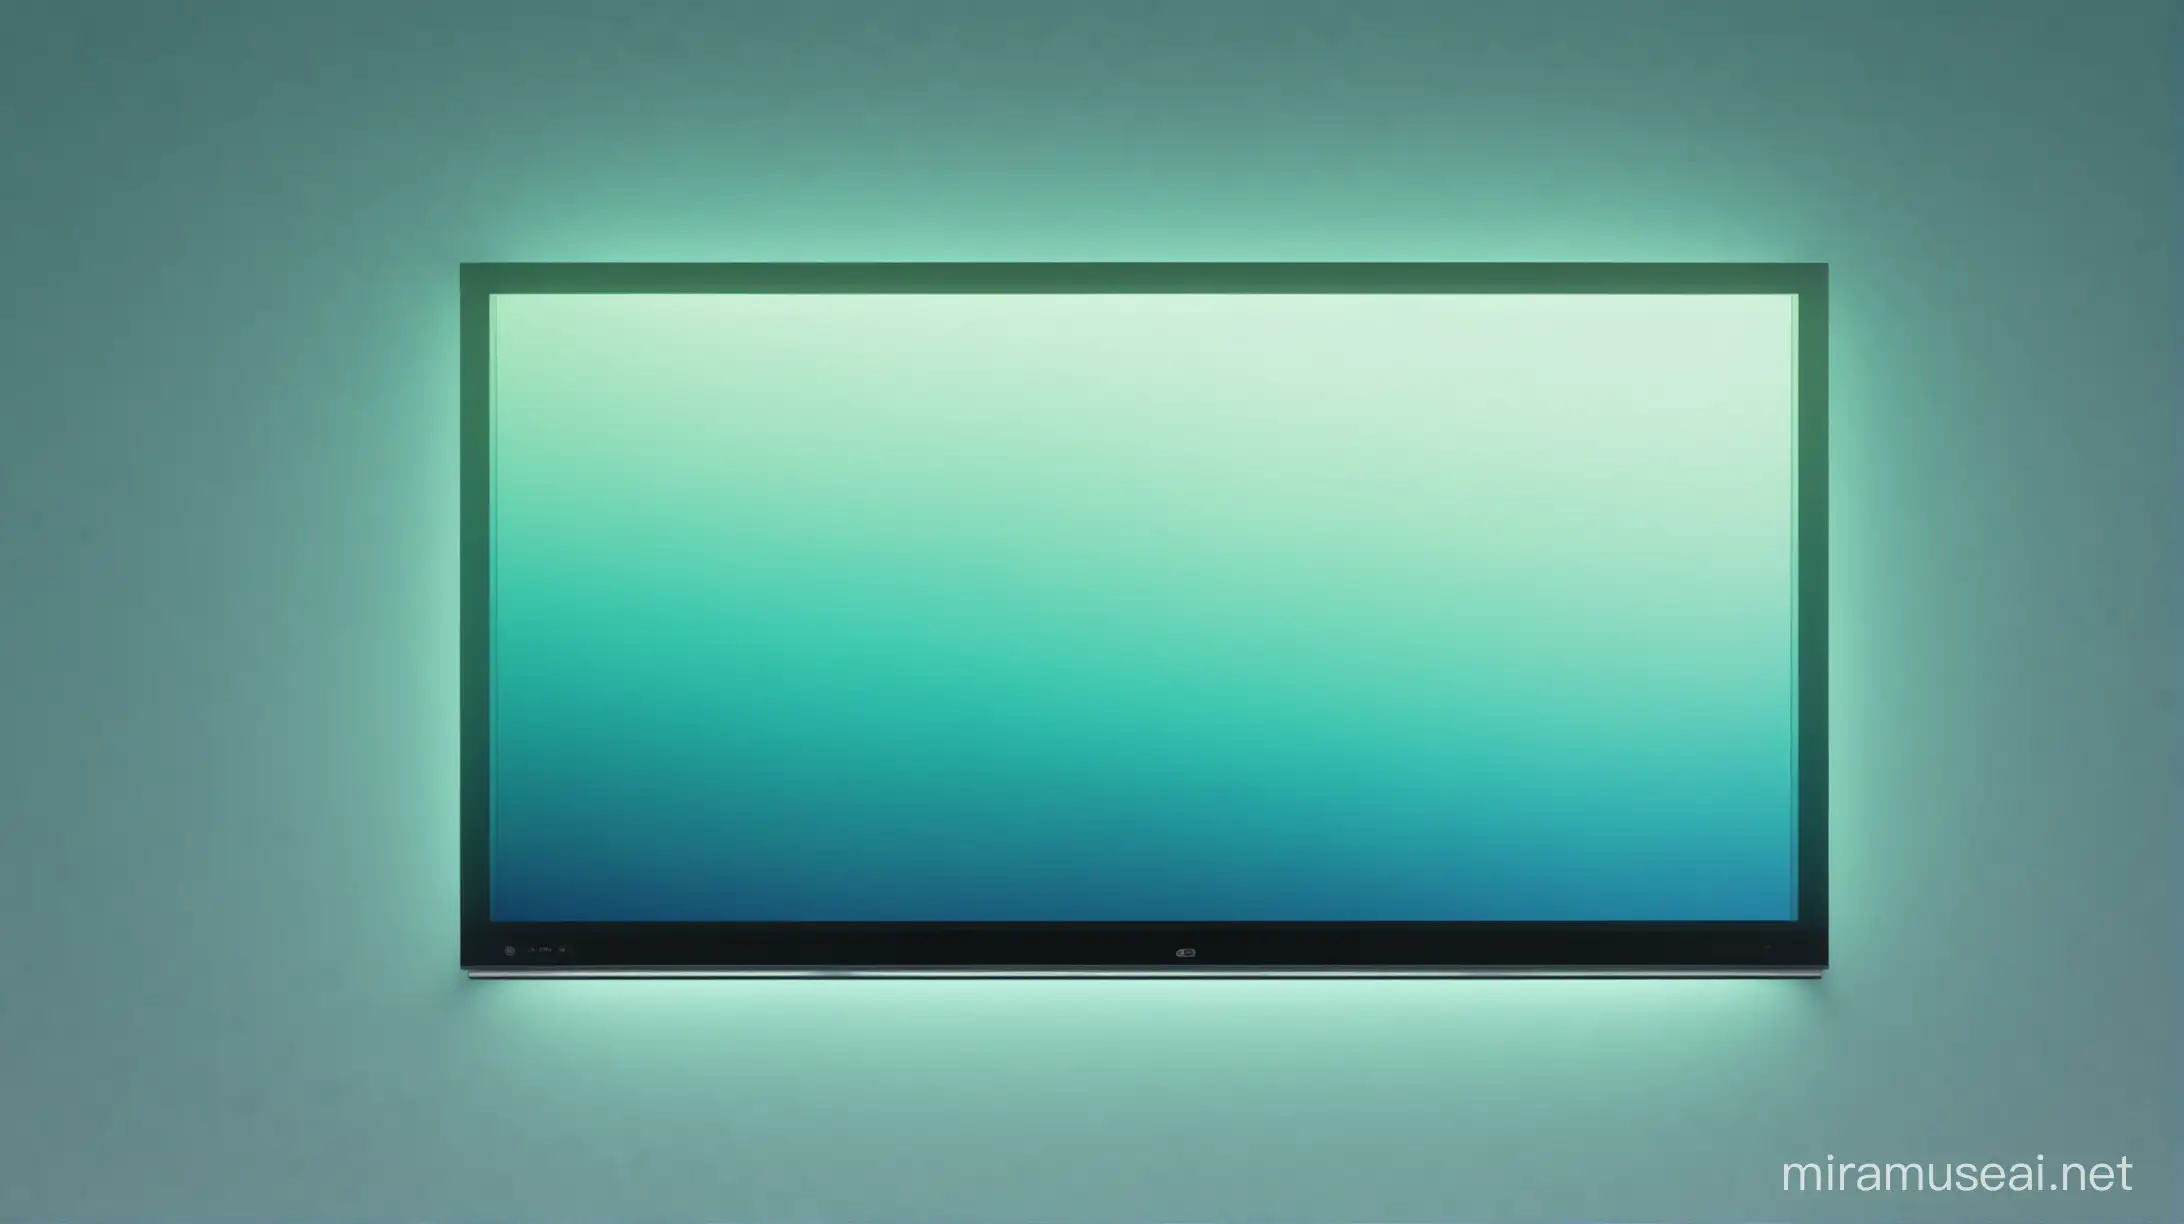 Interactive Screen/High-teah/Minimalistic/blue/green/Gradient color